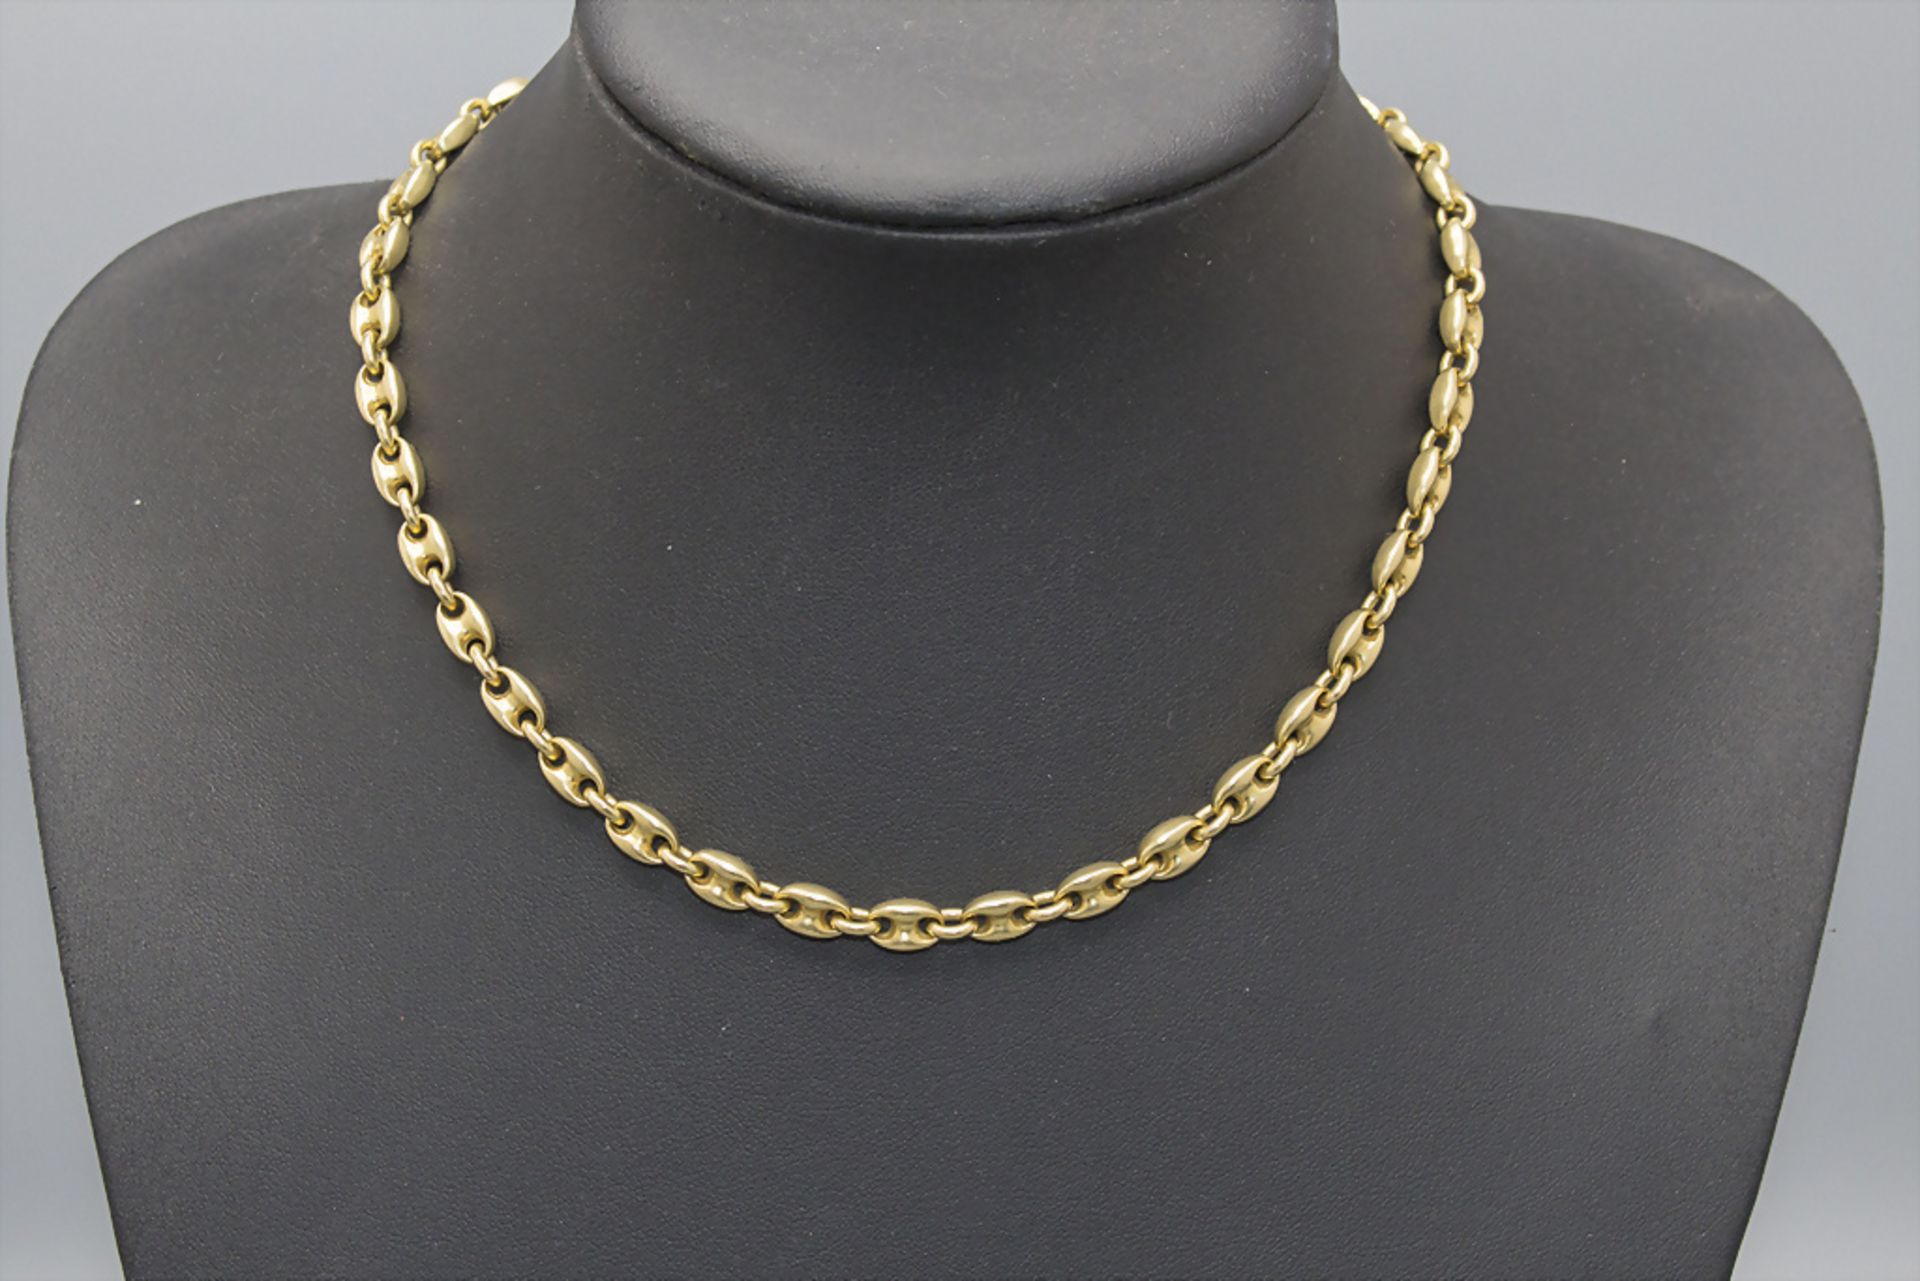 Goldkette / An 18 ct gold necklace